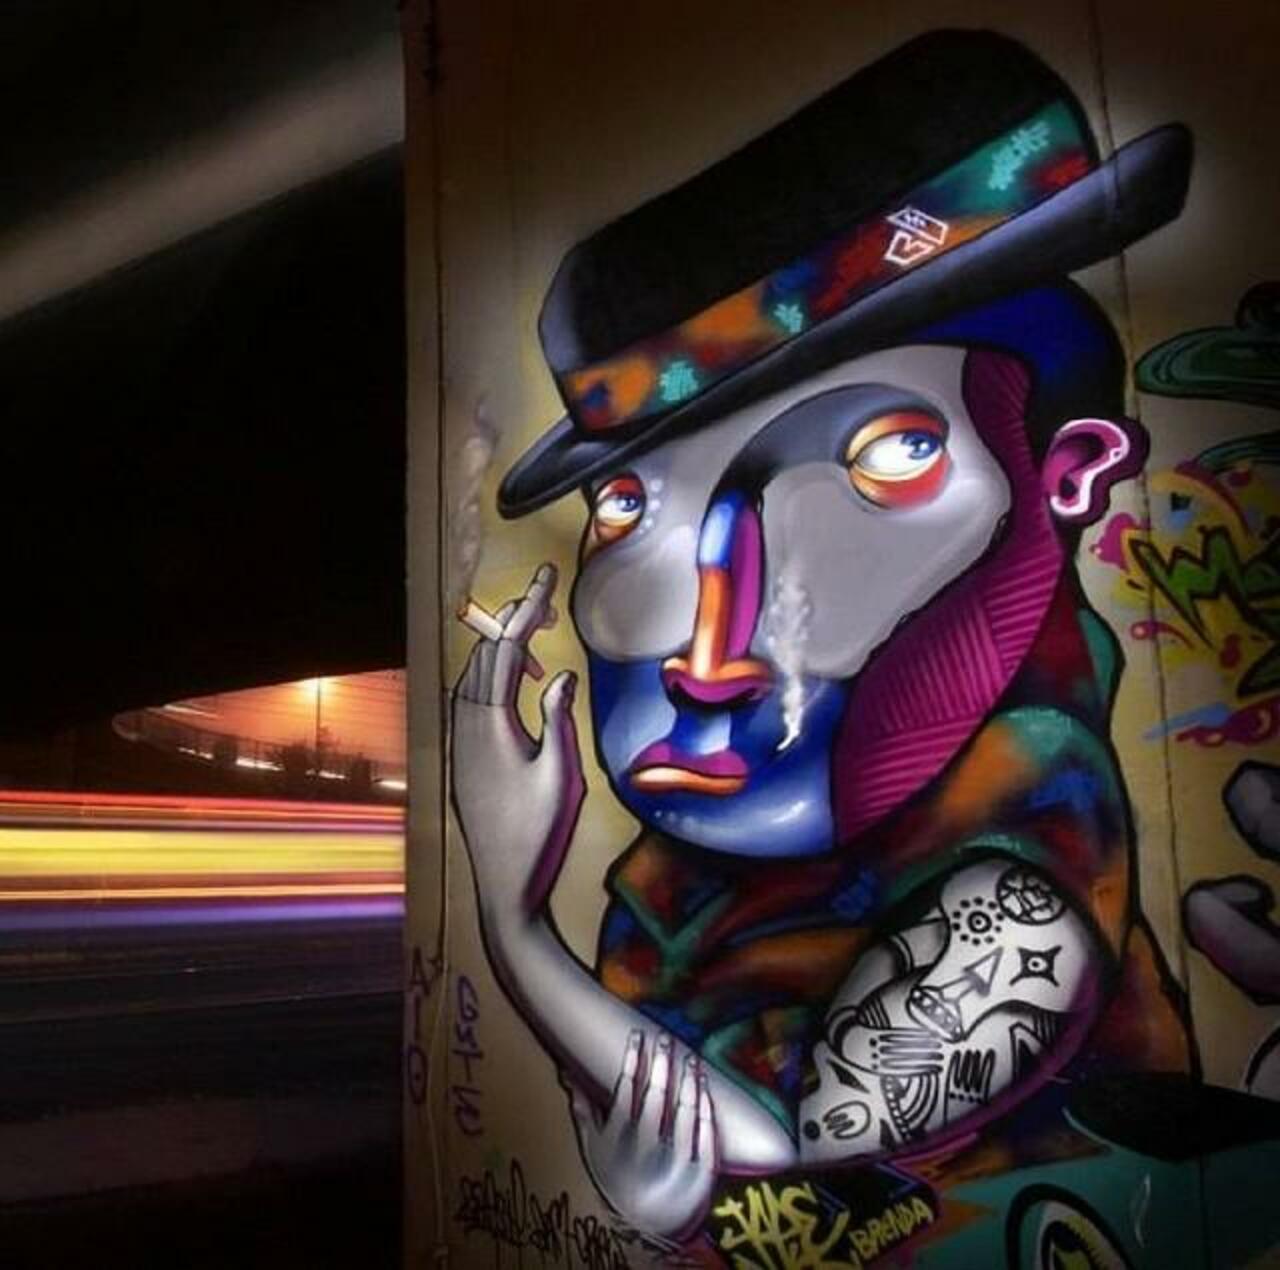 “@GoogleStreetArt: Abstract Street Art by Jade Rivera 

#art #mural #graffiti #streetart http://t.co/luKaWMUC78”